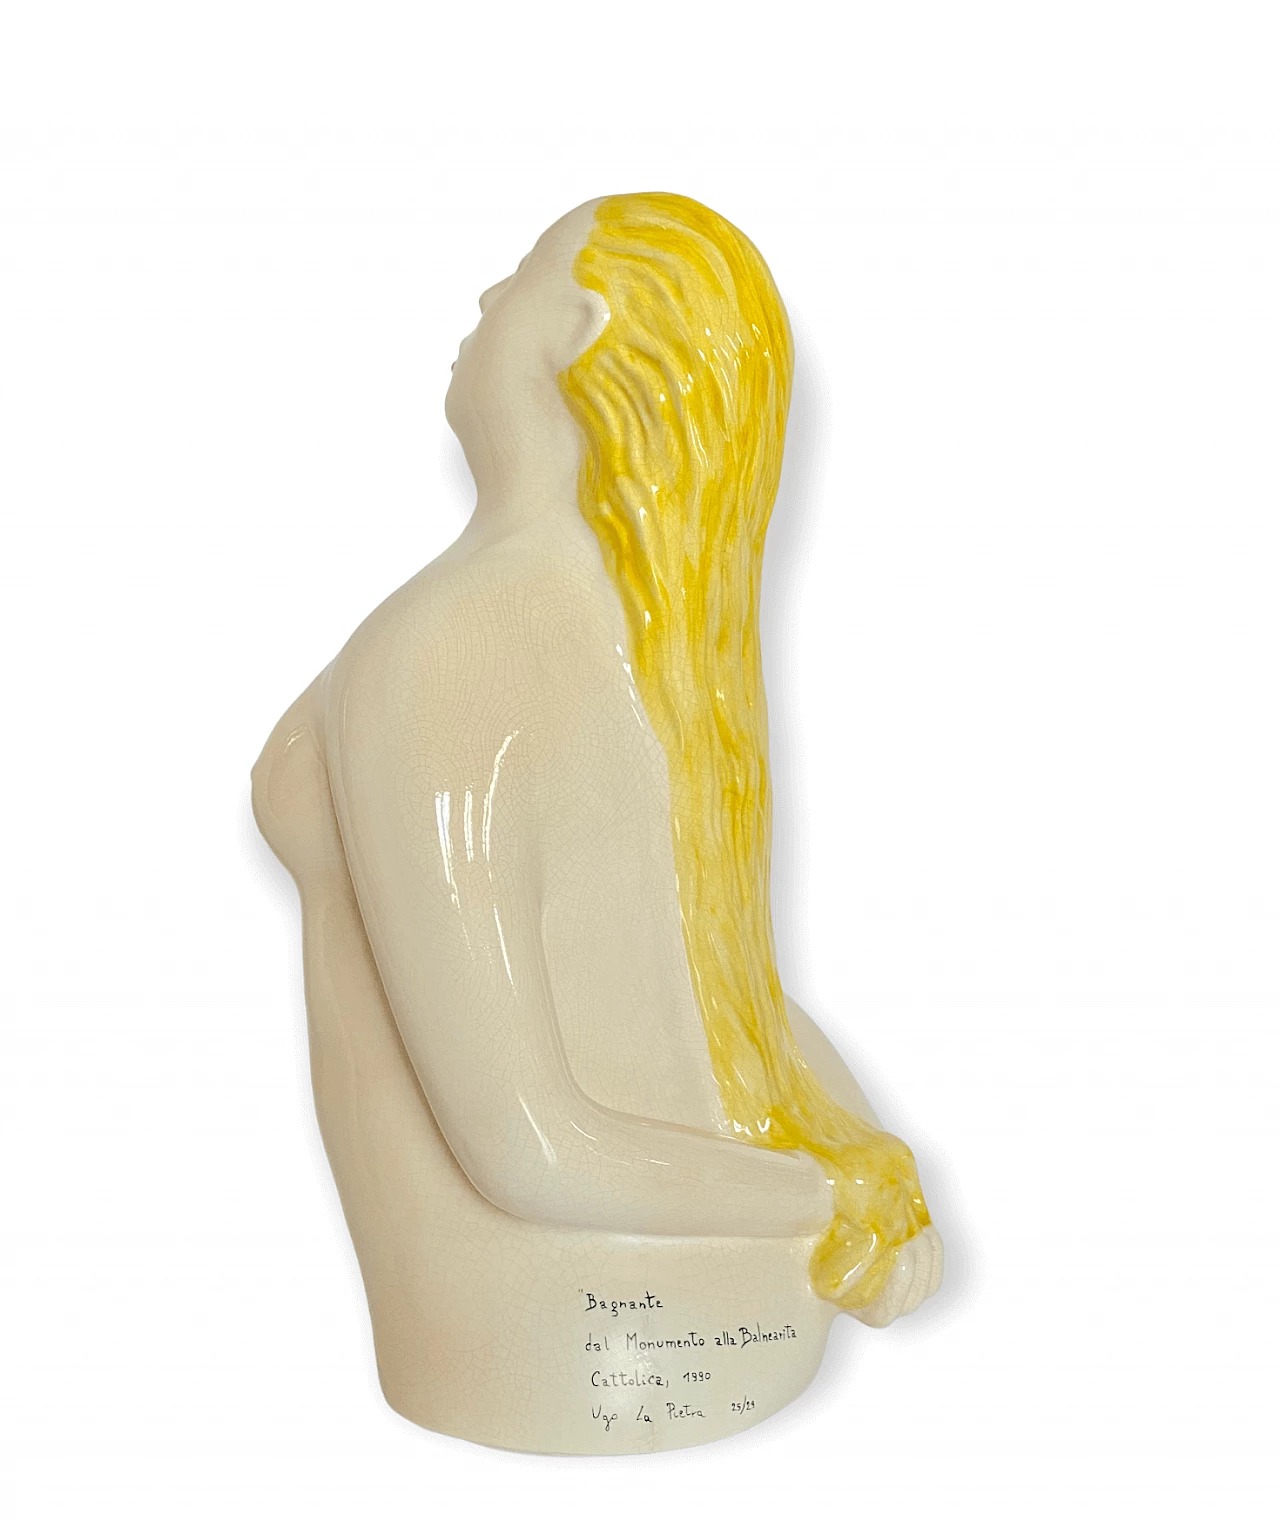 Ugo La Pietra, Bather, glazed ceramic sculpture, 1990 18